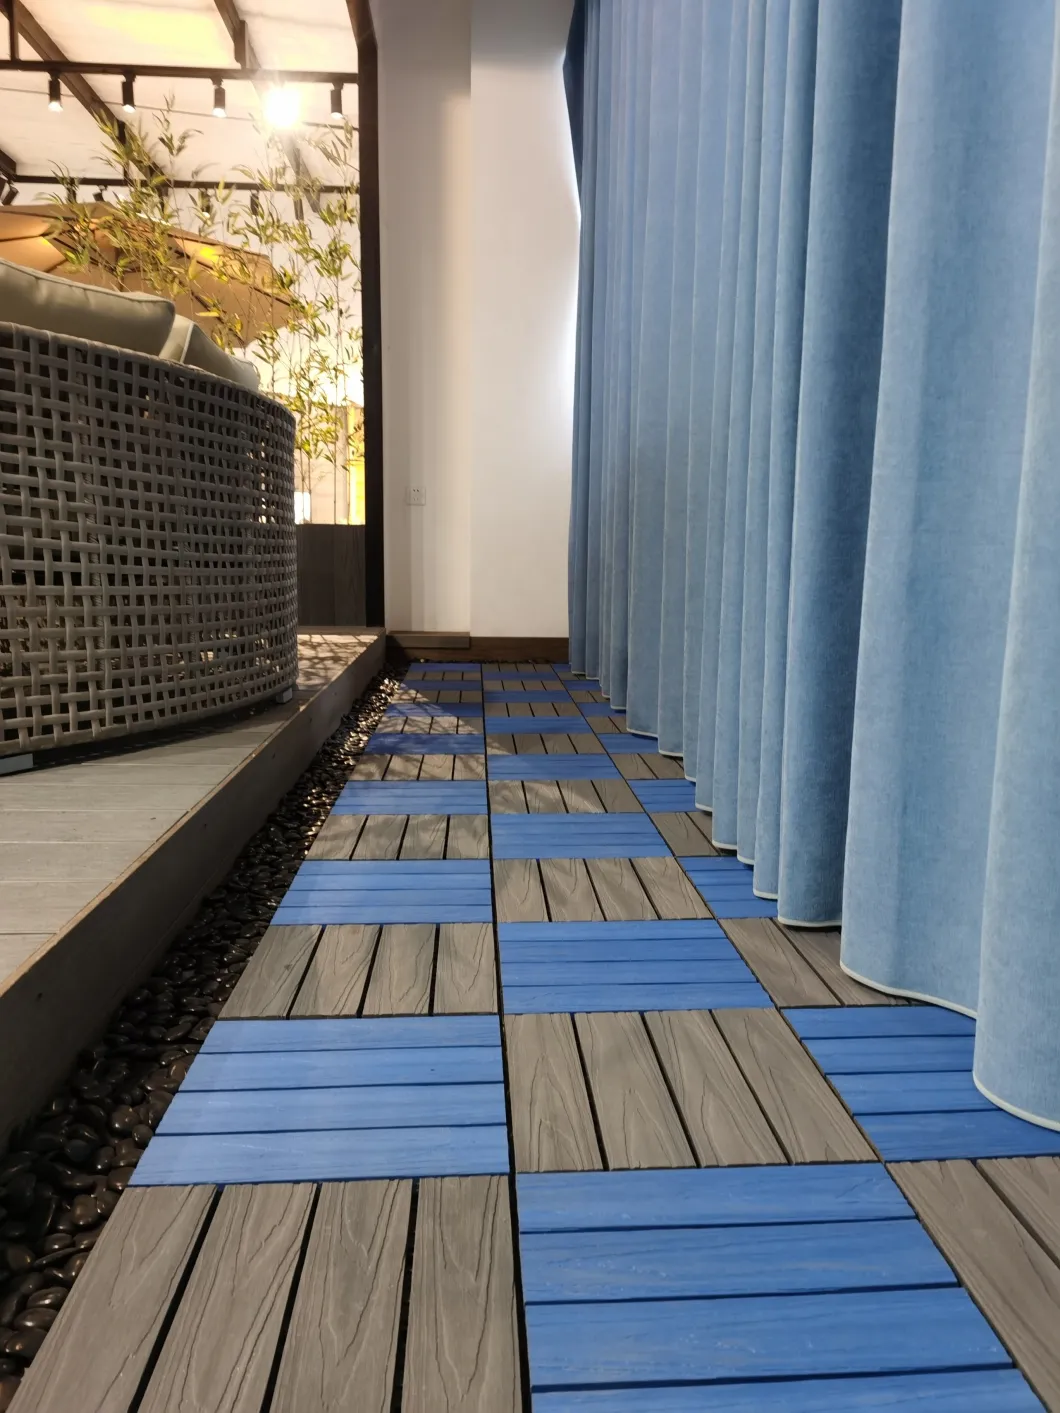 Durable WPC Wood Plastic Composite Decking Interlocking Puzzle Floor for Outdoor DIY WPC Tile